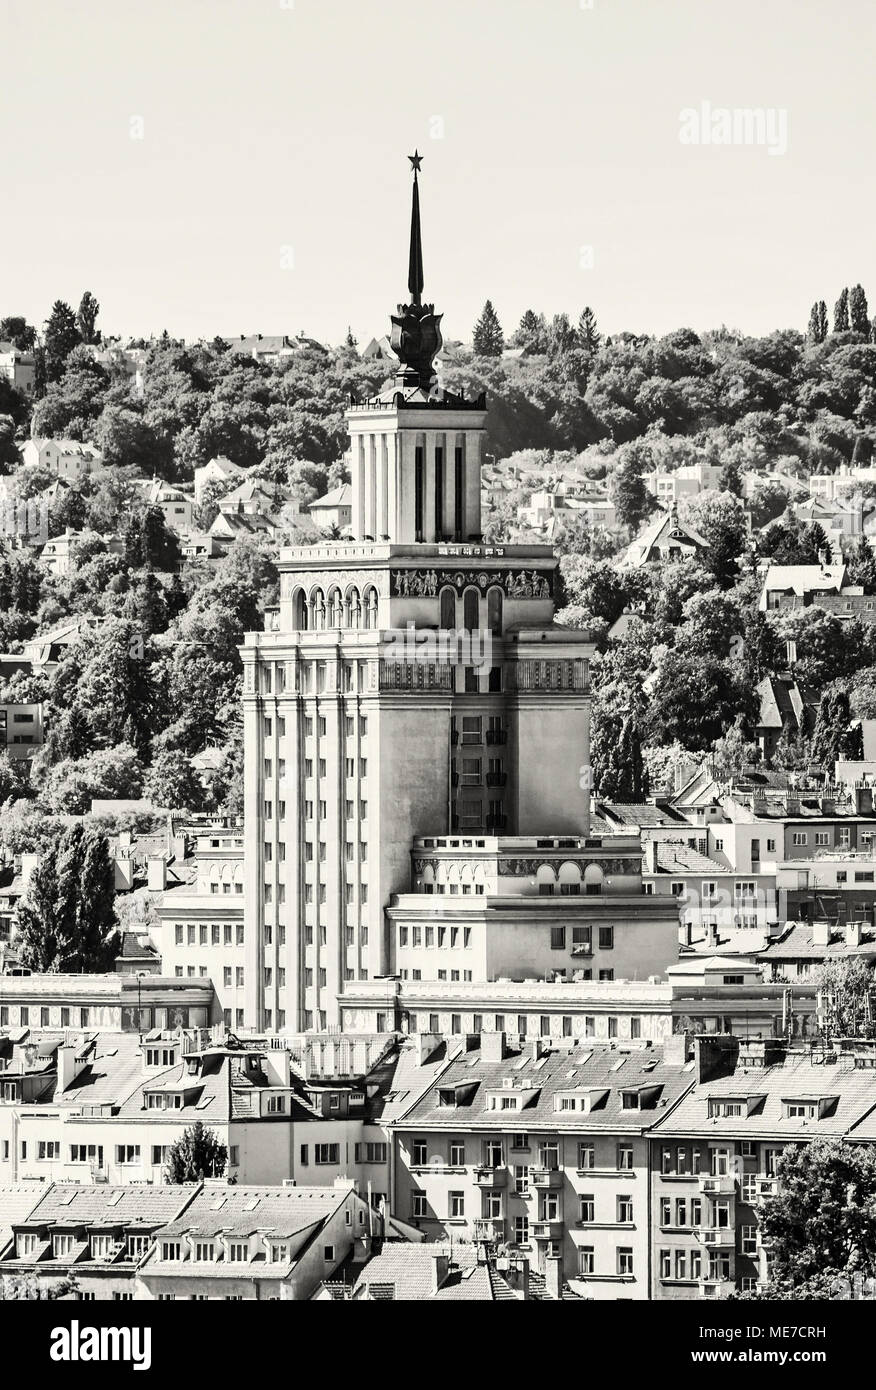 Hotel International, Prague, Czech republic. Architectural scene. Travel destination. Black and white photo. Stock Photo